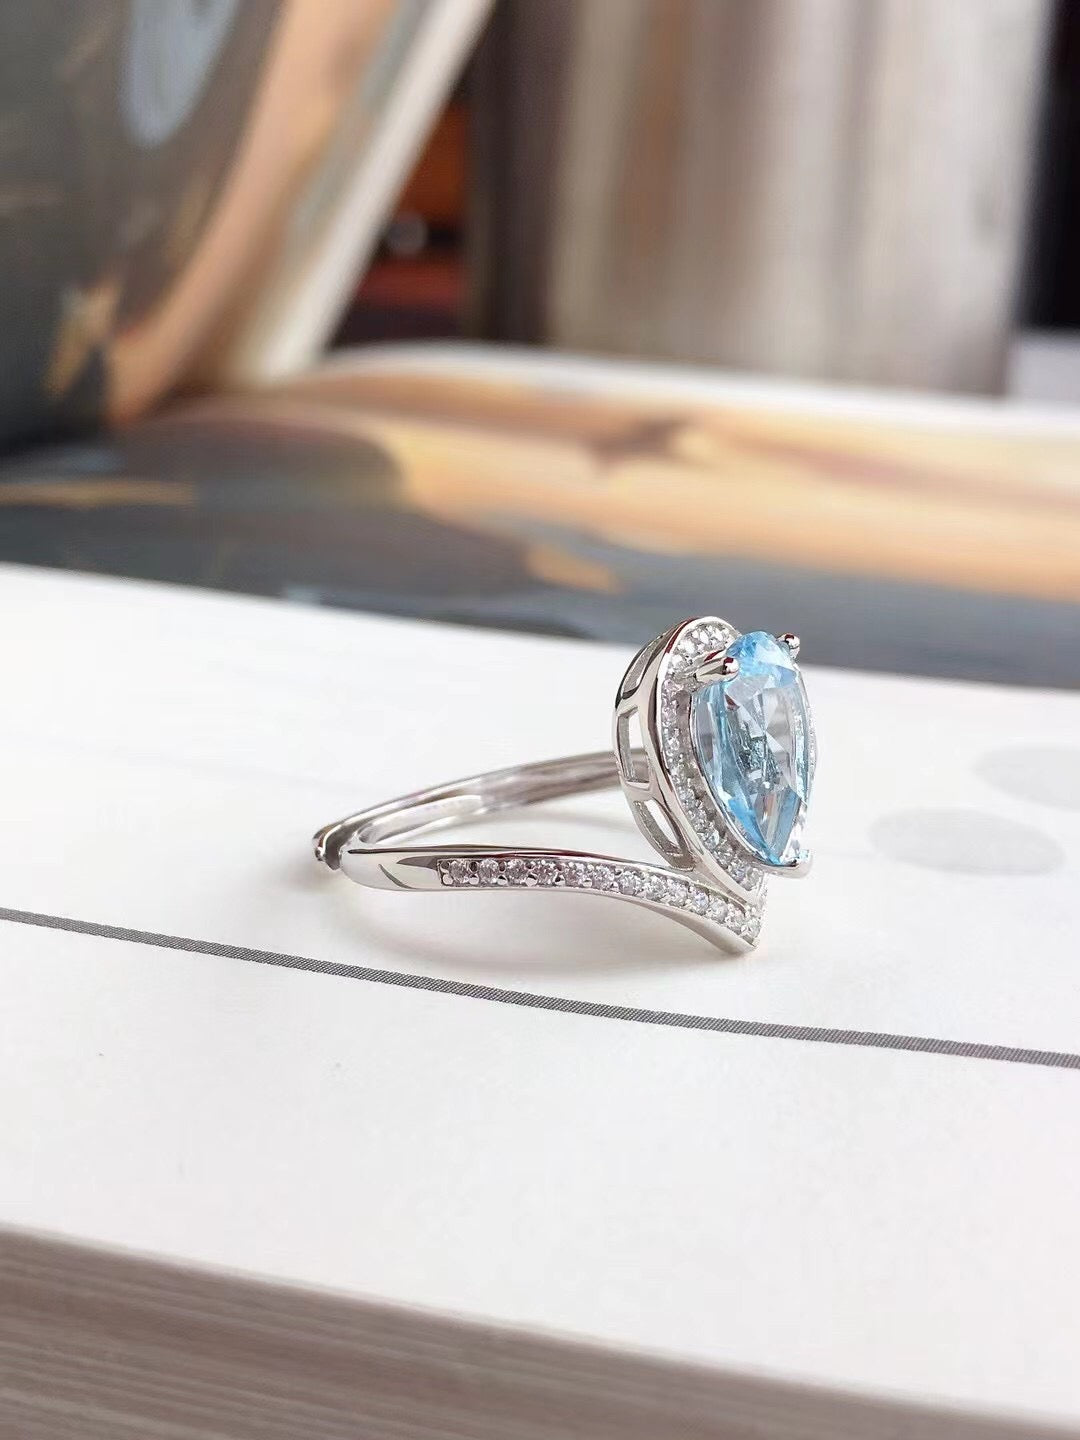 Enchanted rings in blue topaz